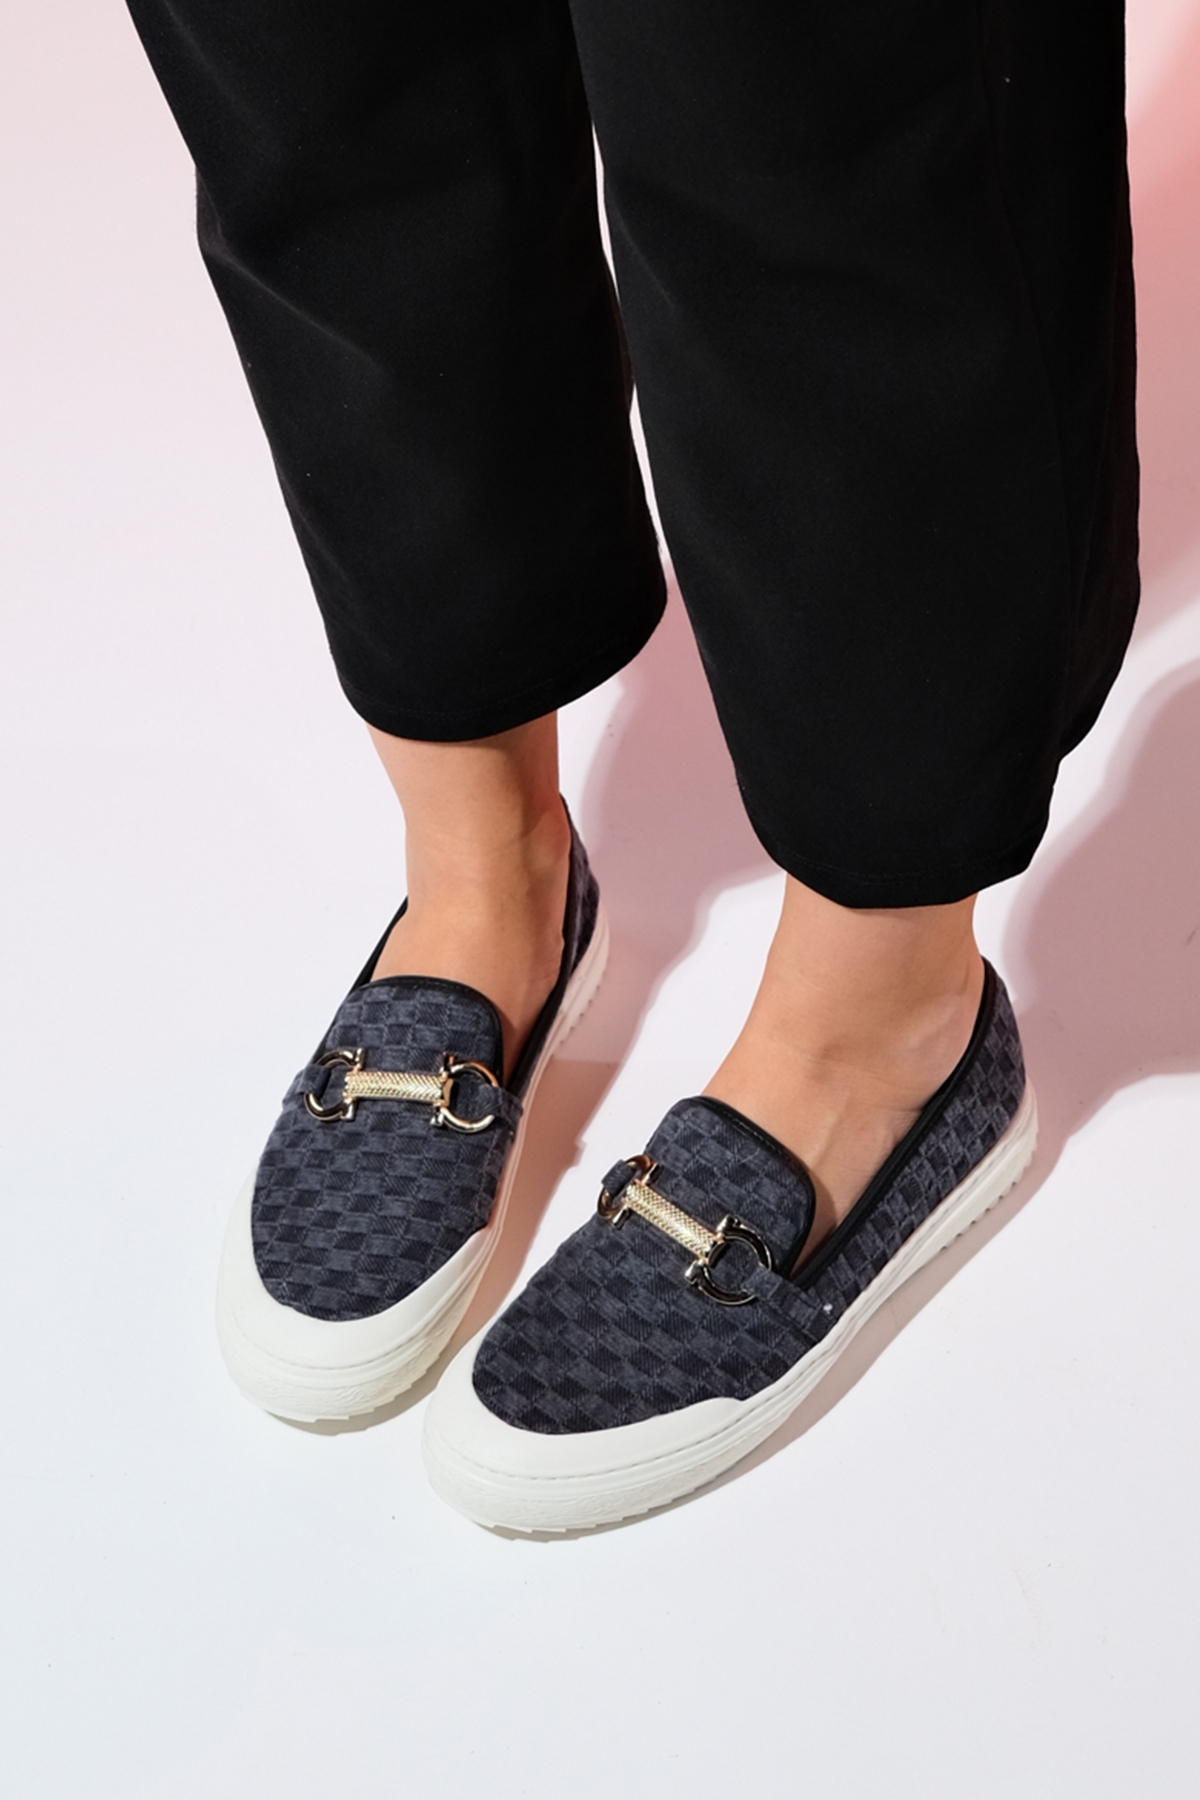 LuviShoes Marrakesh Black Denim Women's Buckled Loafer Shoes